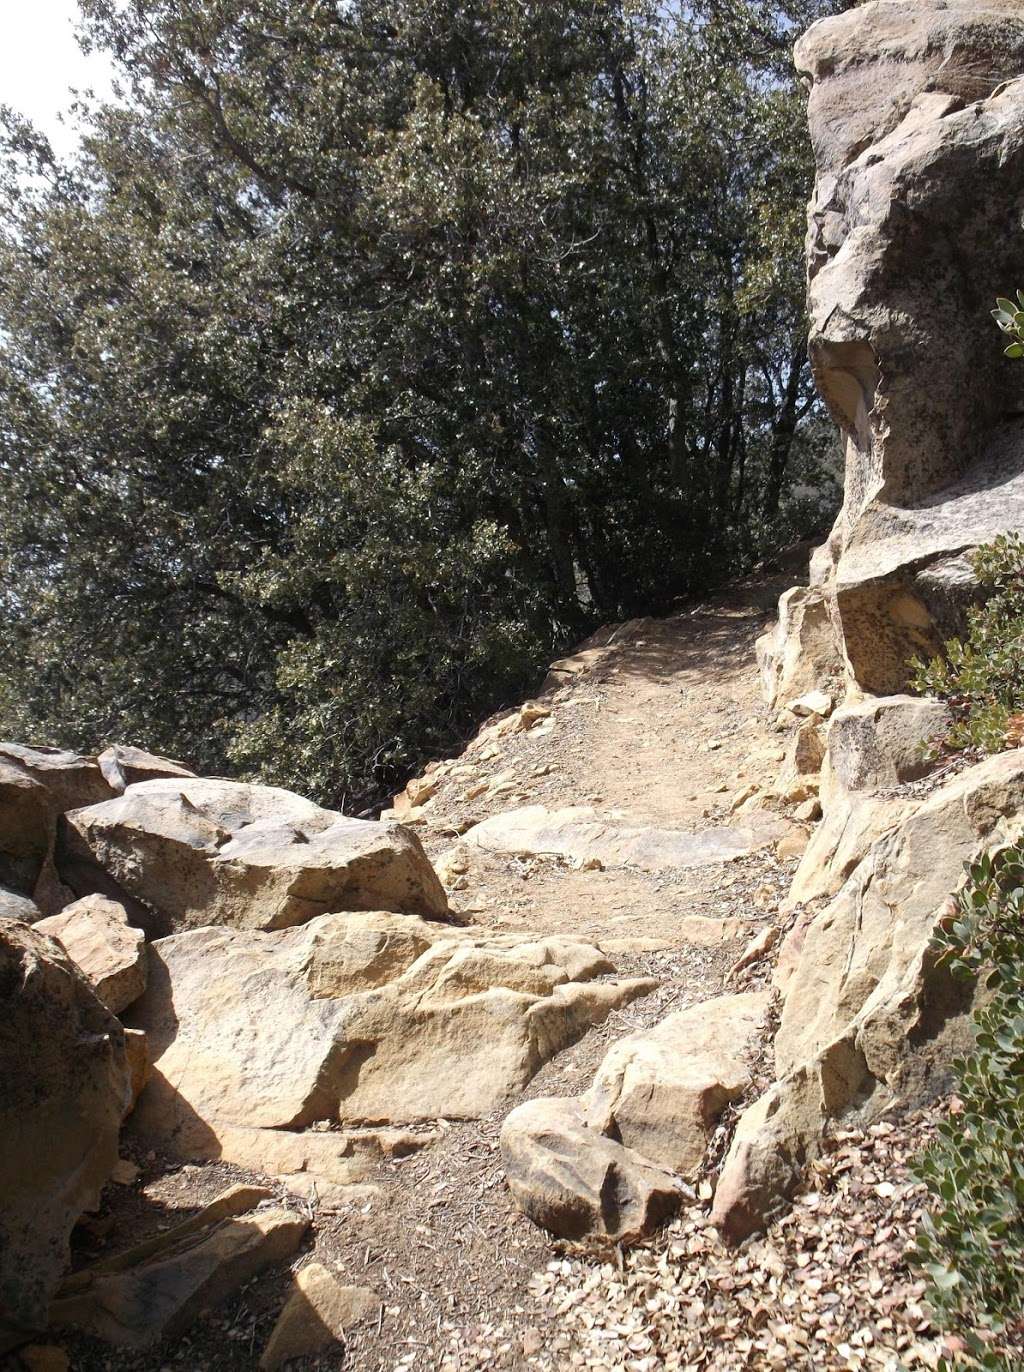 Chorro Grande Trail | Maricopa, CA 93252